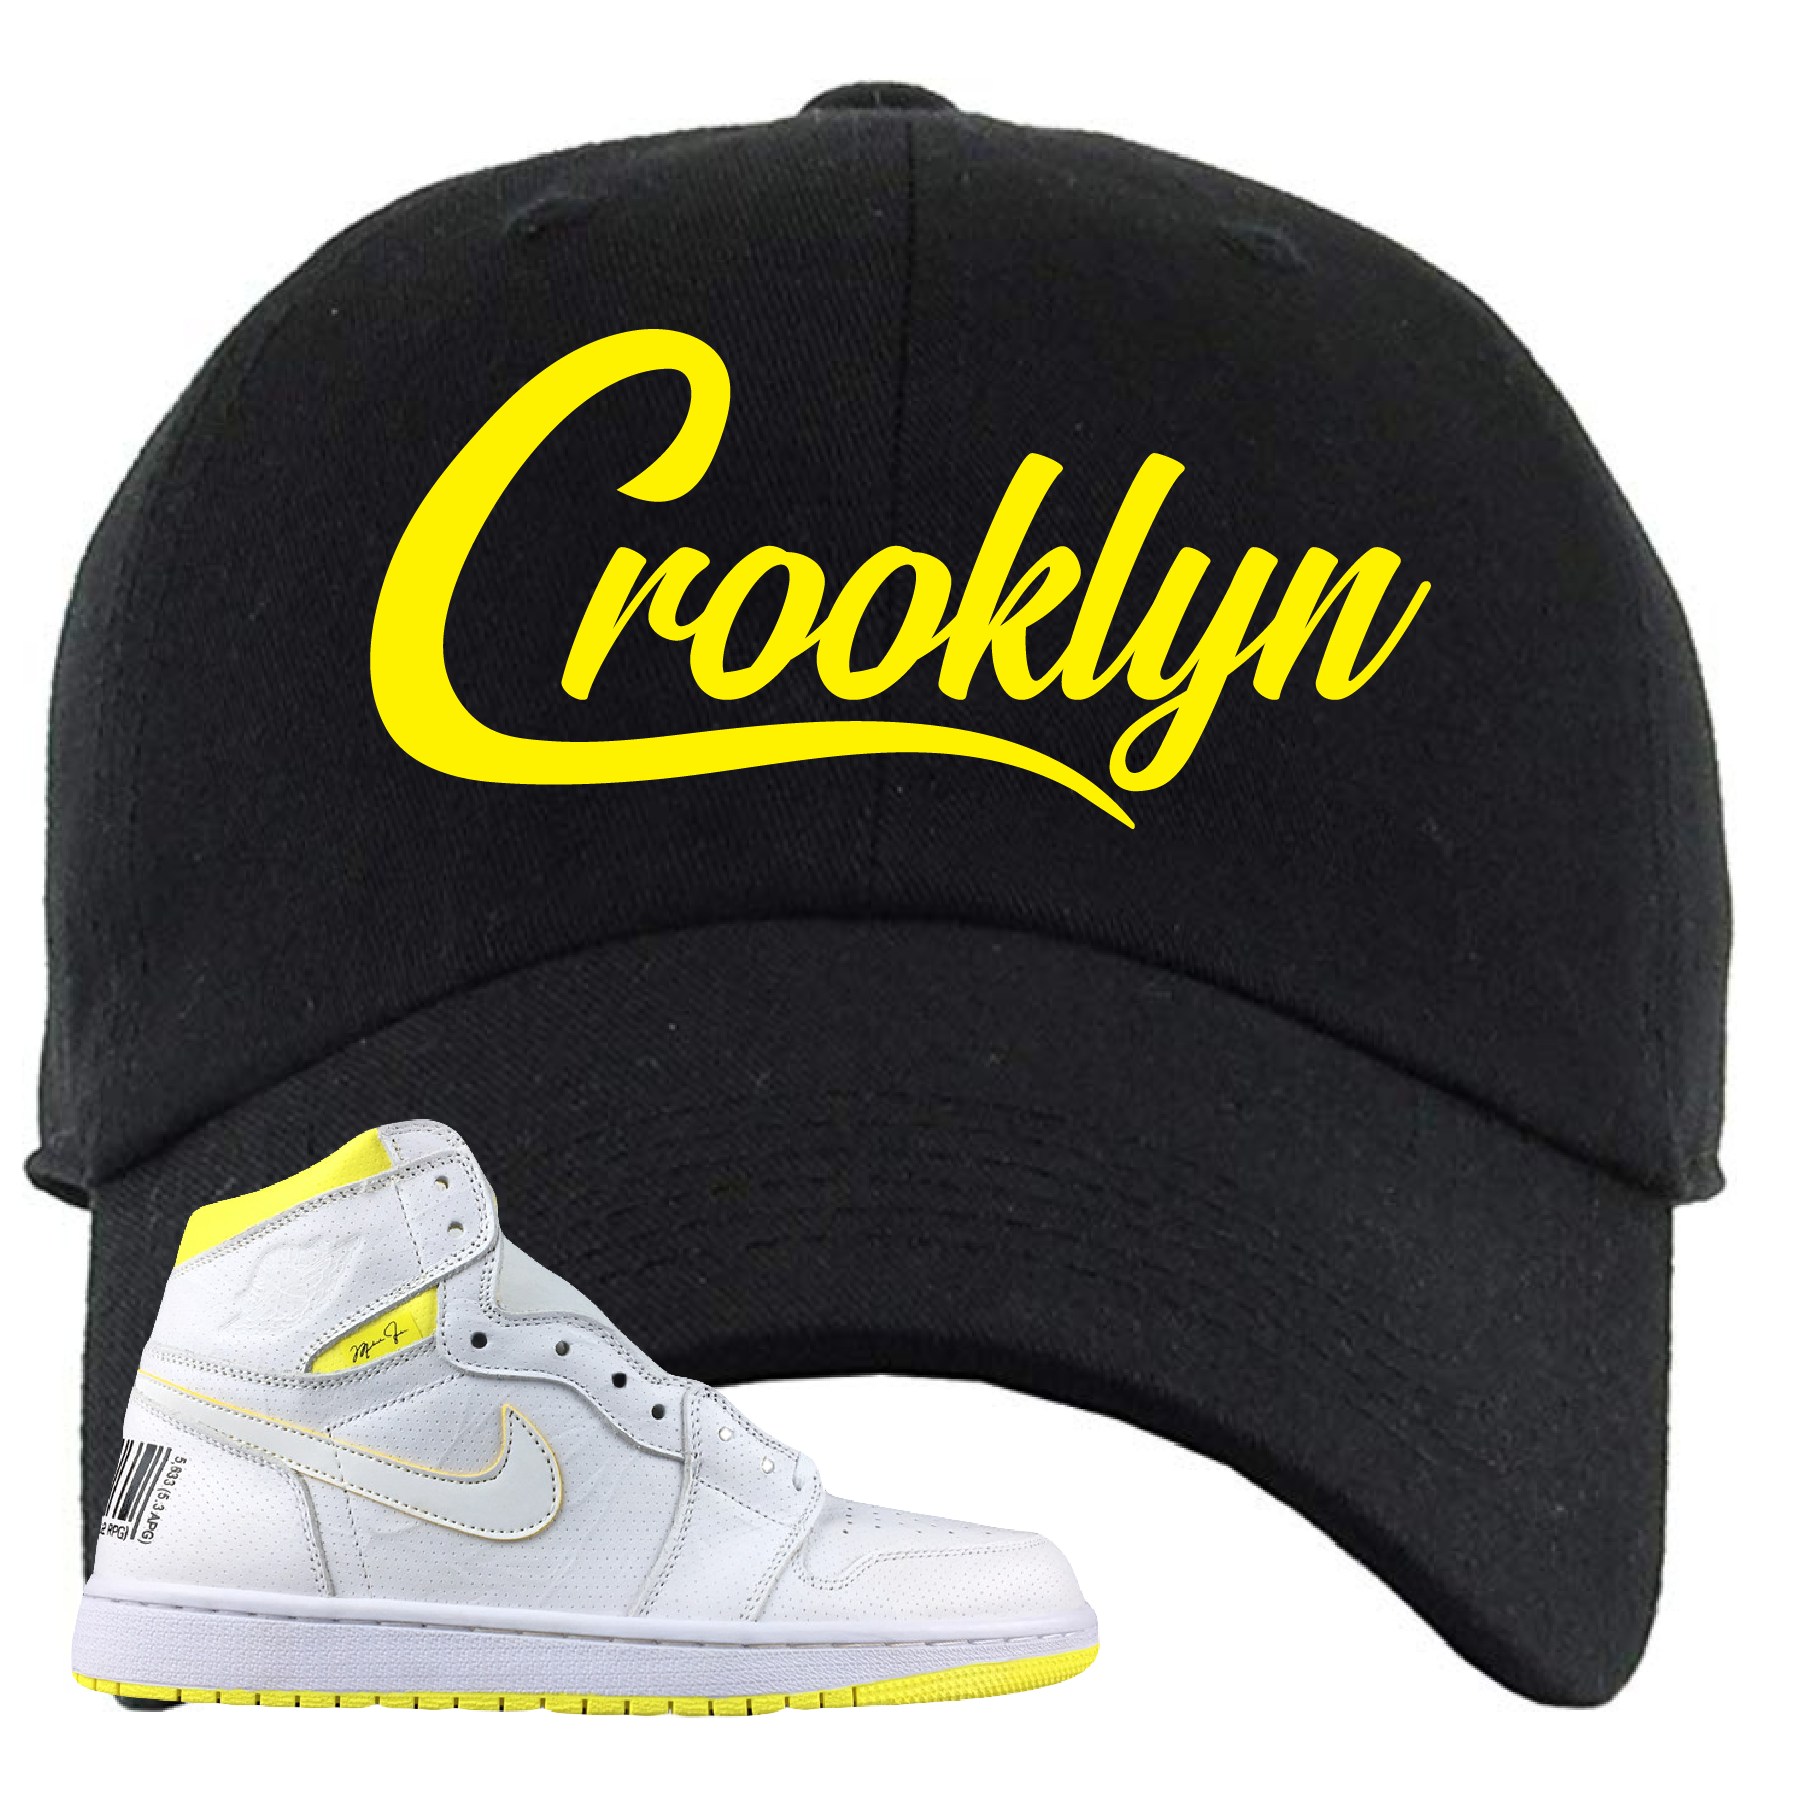 Jordan 1 First Class Flight Crooklyn Sneaker Matching Black Dad Hat